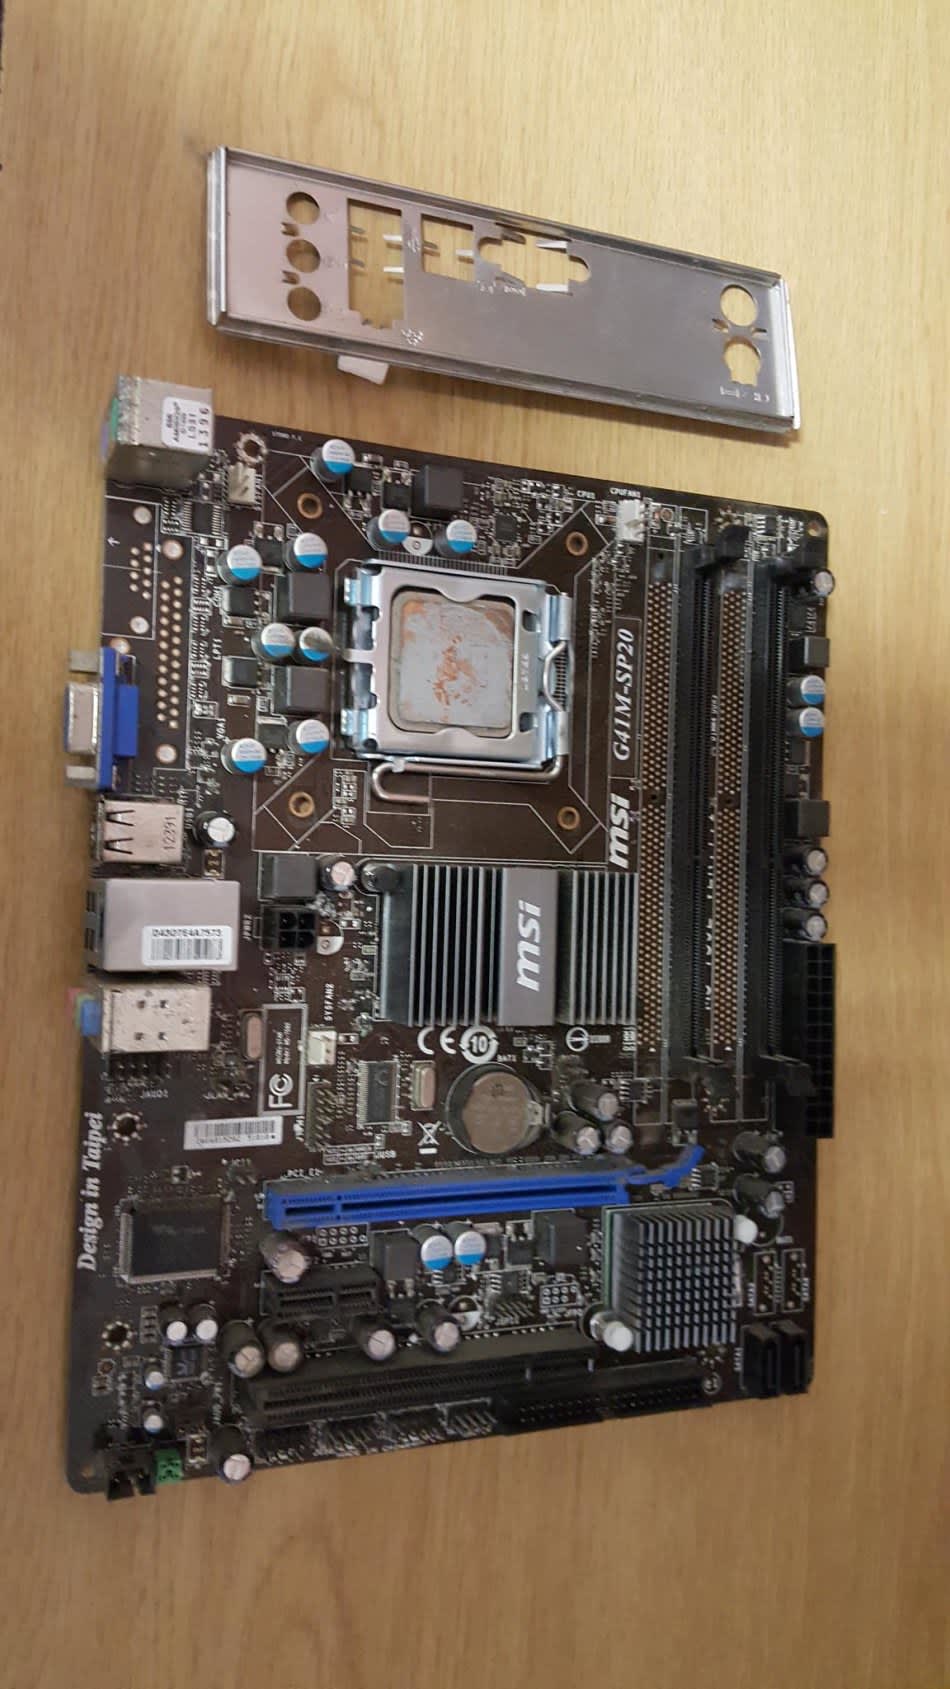 Motherboard & CPU Bundles - Motherboard + E5300 Dual Core Intel CPU